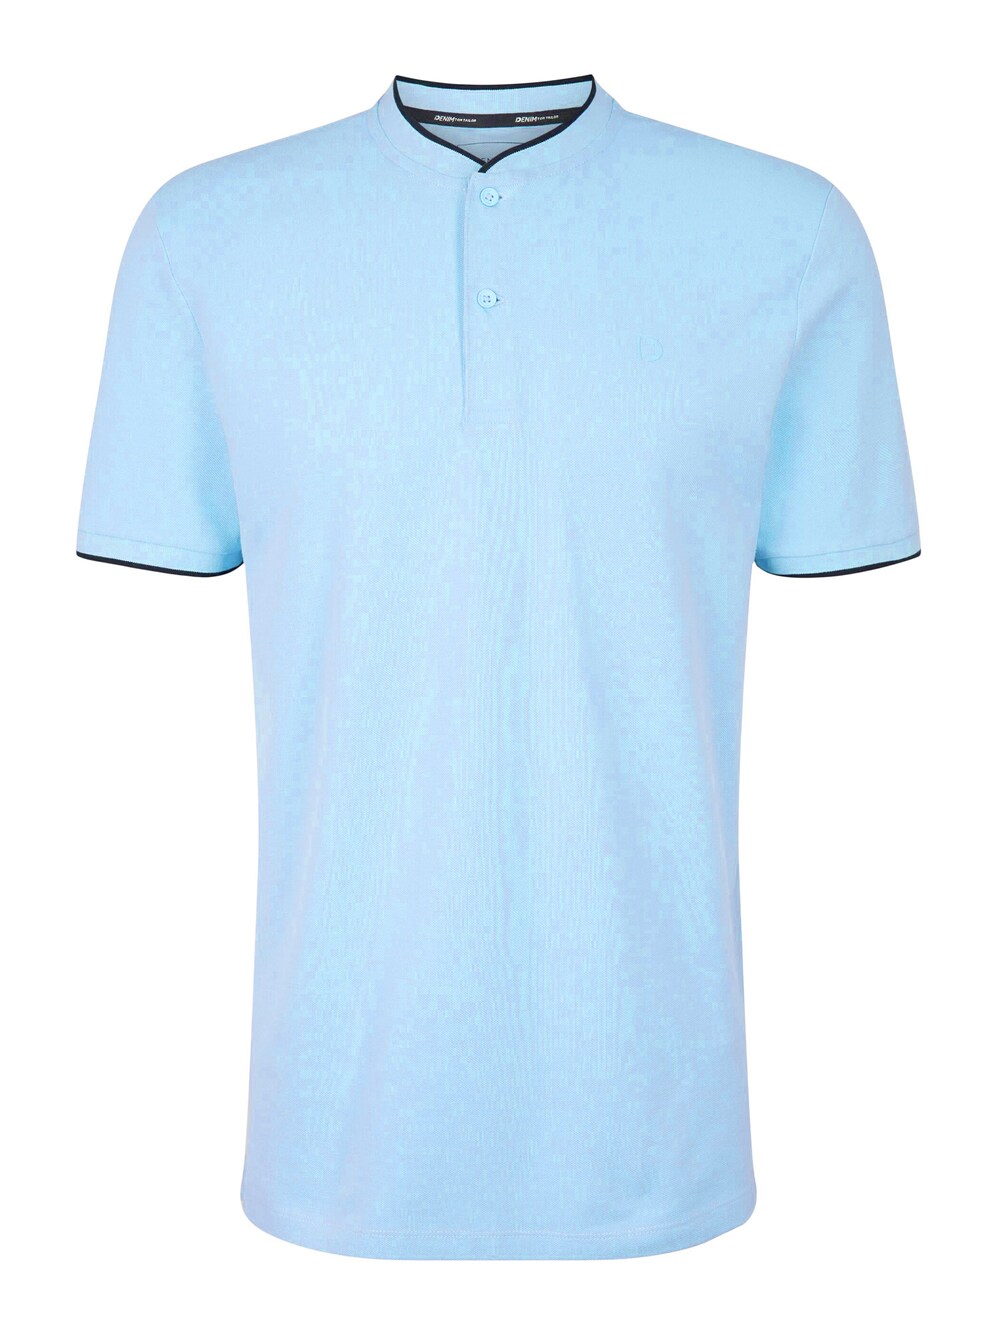 Футболка TOM TAILOR DENIM, темно-синий/светло-голубой футболка tom tailor размер m белый голубой